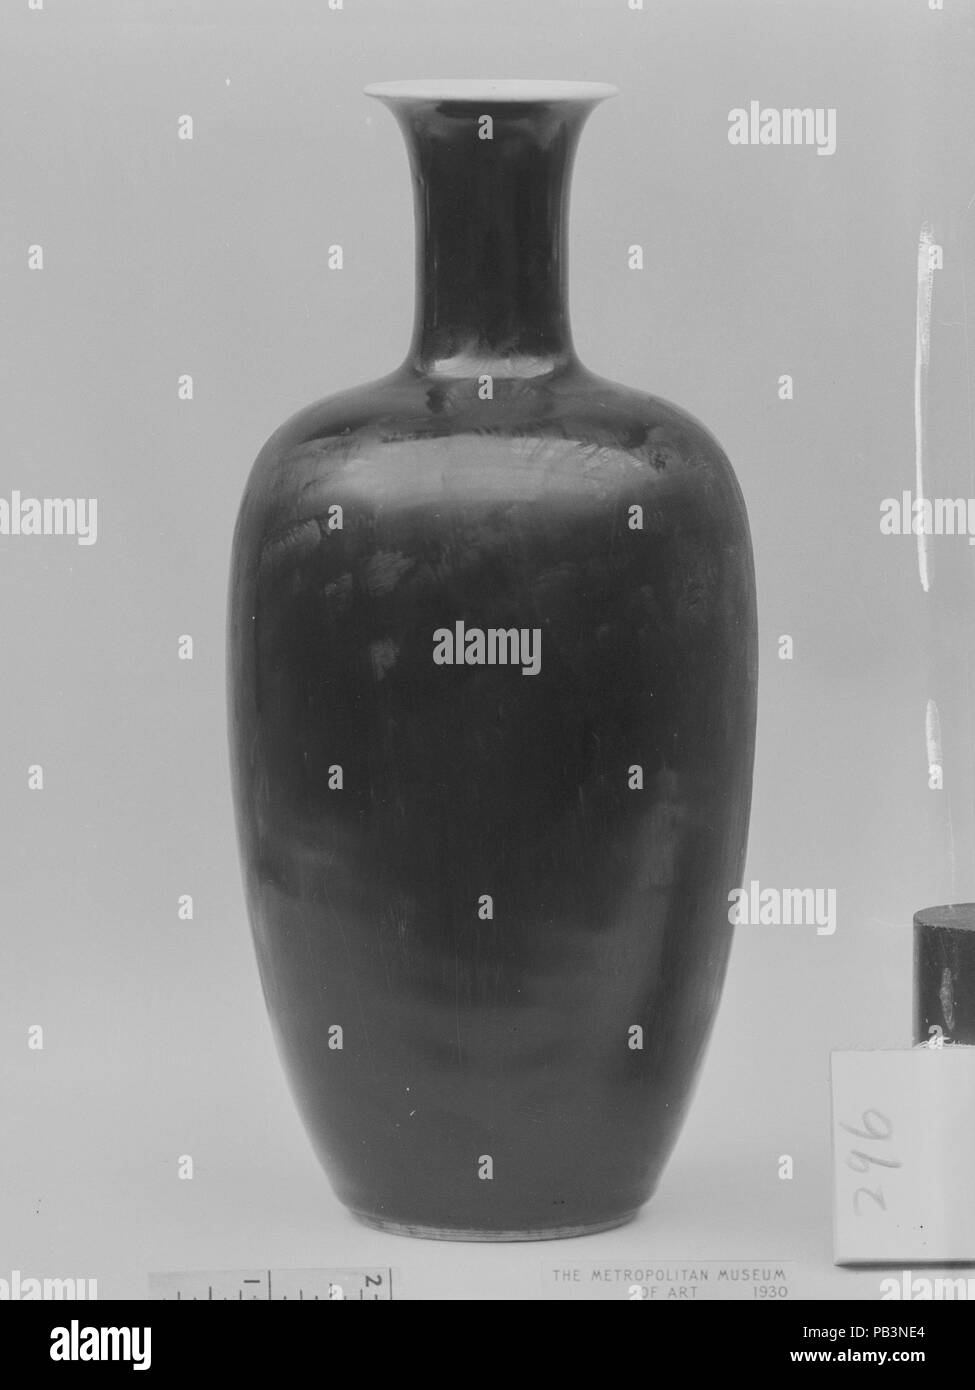 Vase. Culture: China. Dimensions: H. 10 in. (25.4 cm); Diam. 2 1/2 in. (6.4 cm). Museum: Metropolitan Museum of Art, New York, USA. Stock Photo